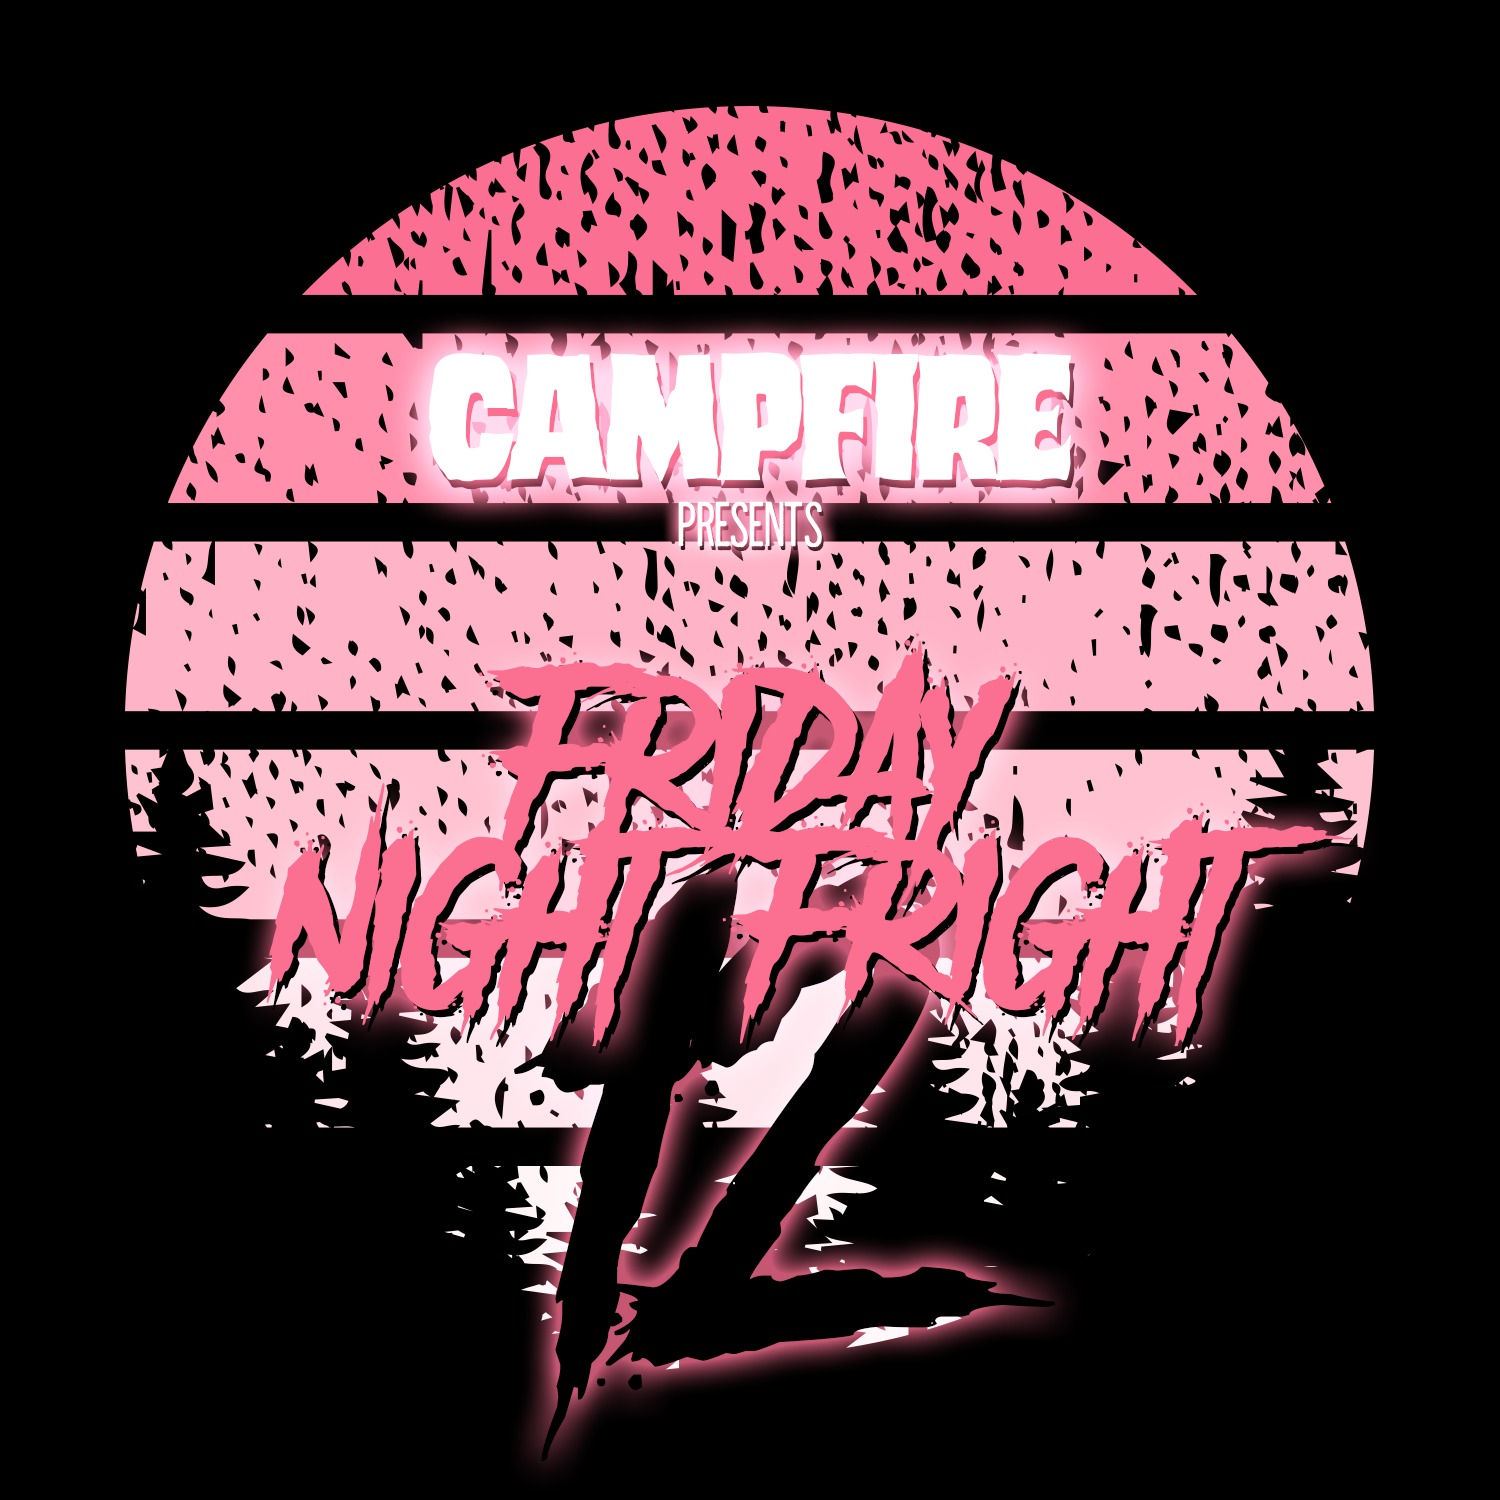 Friday Night Fright 12